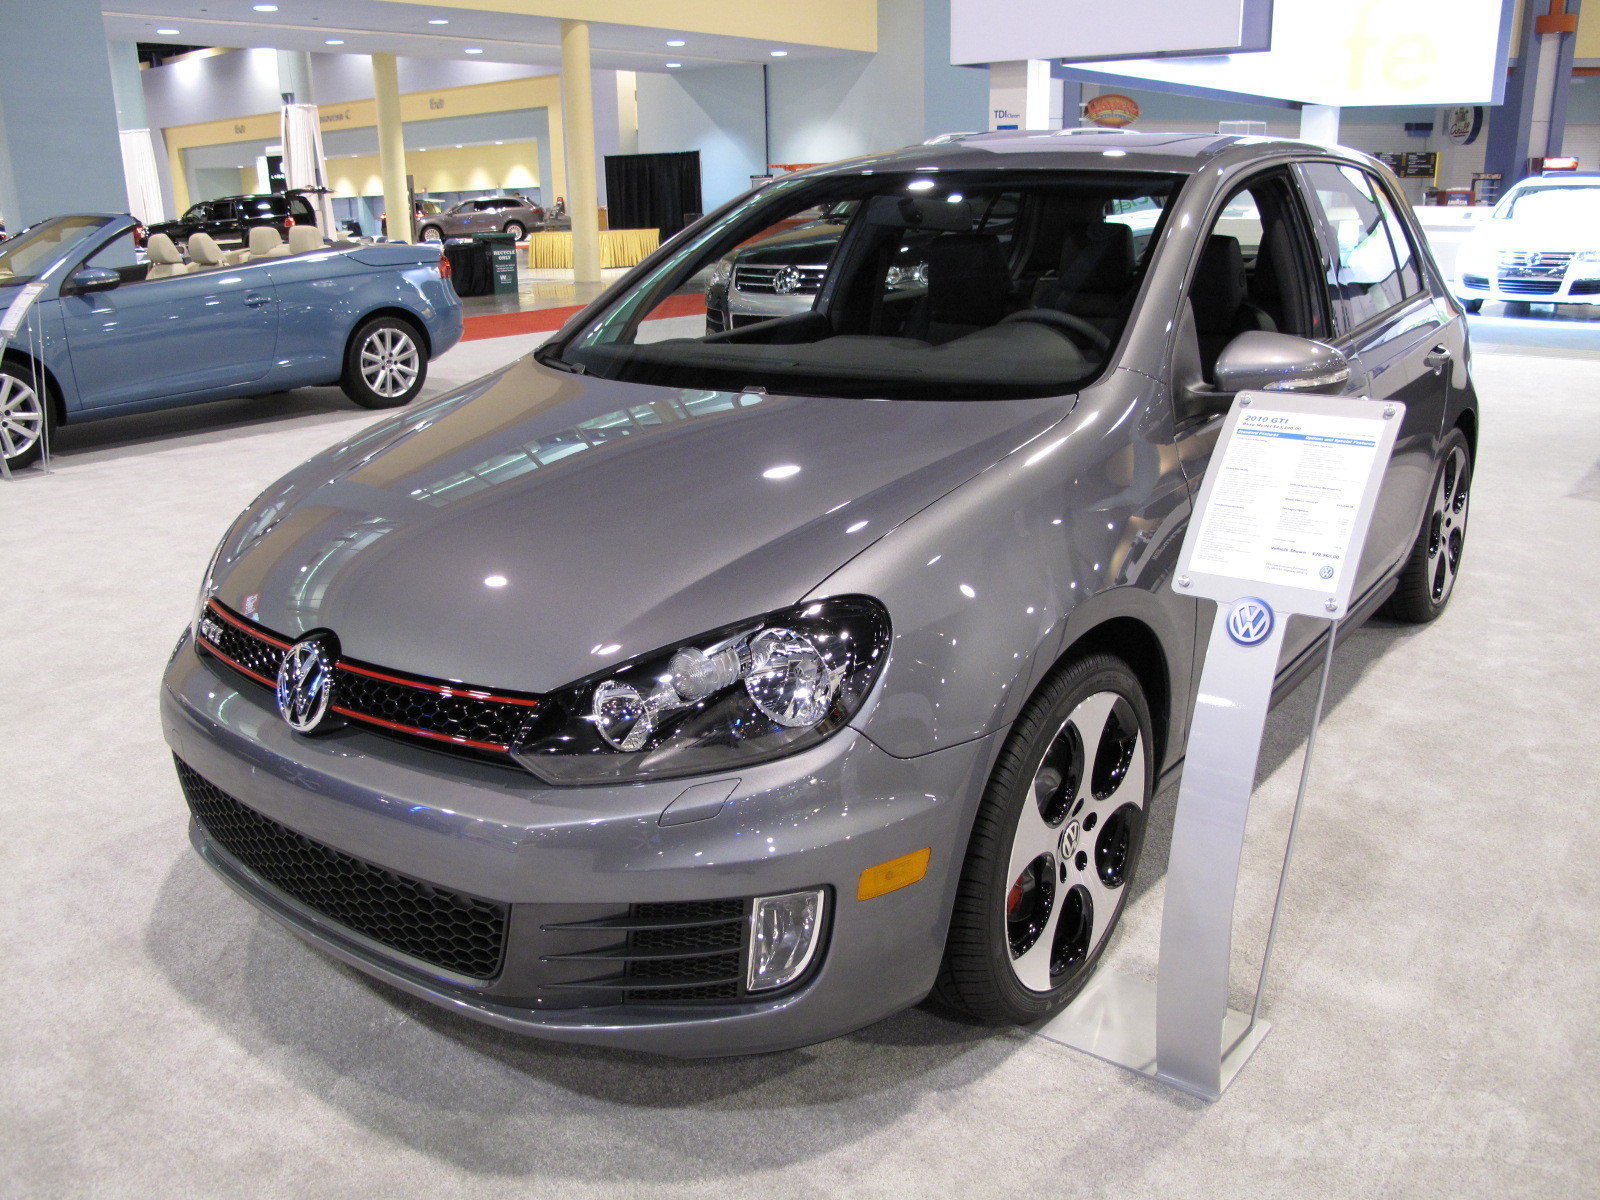 Volkswagen Golf GTI VI at the South Florida Auto Show